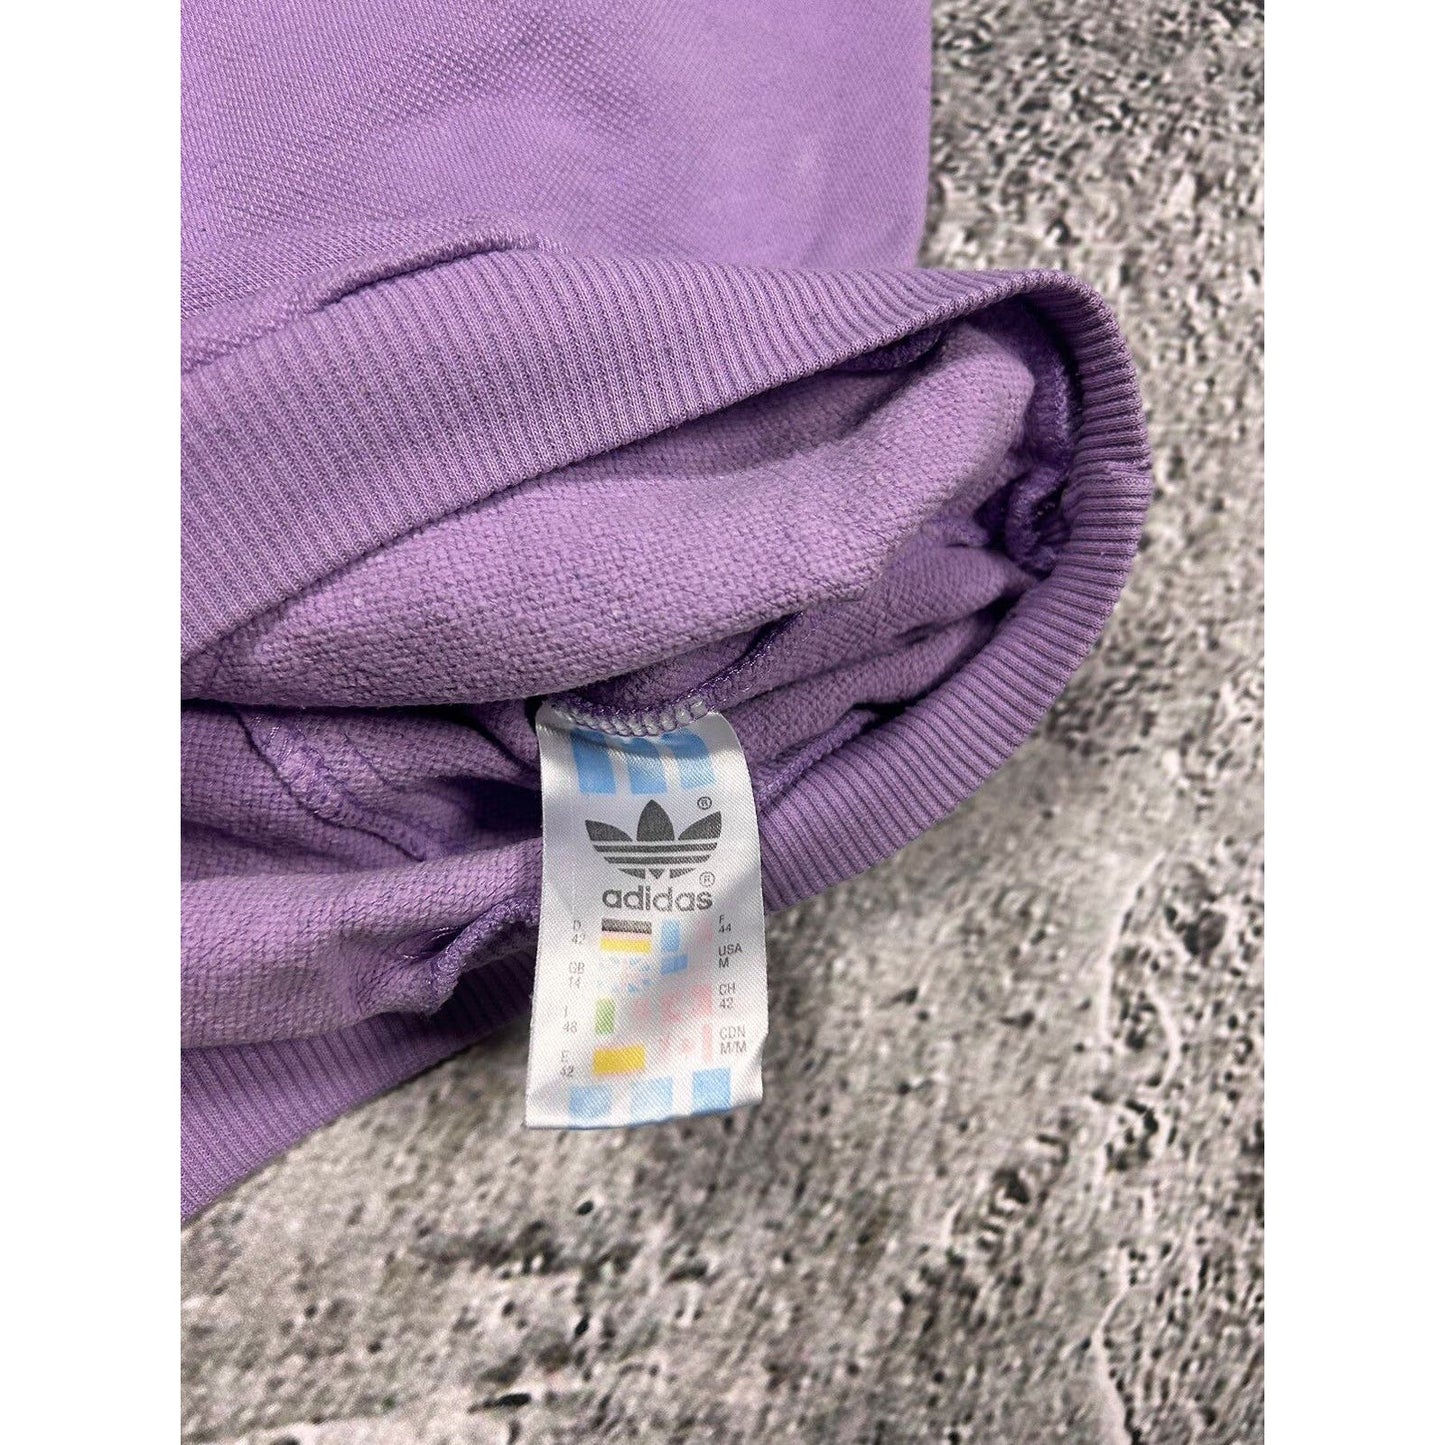 Adidas women’s & gym track suit sweat set lilac vintage